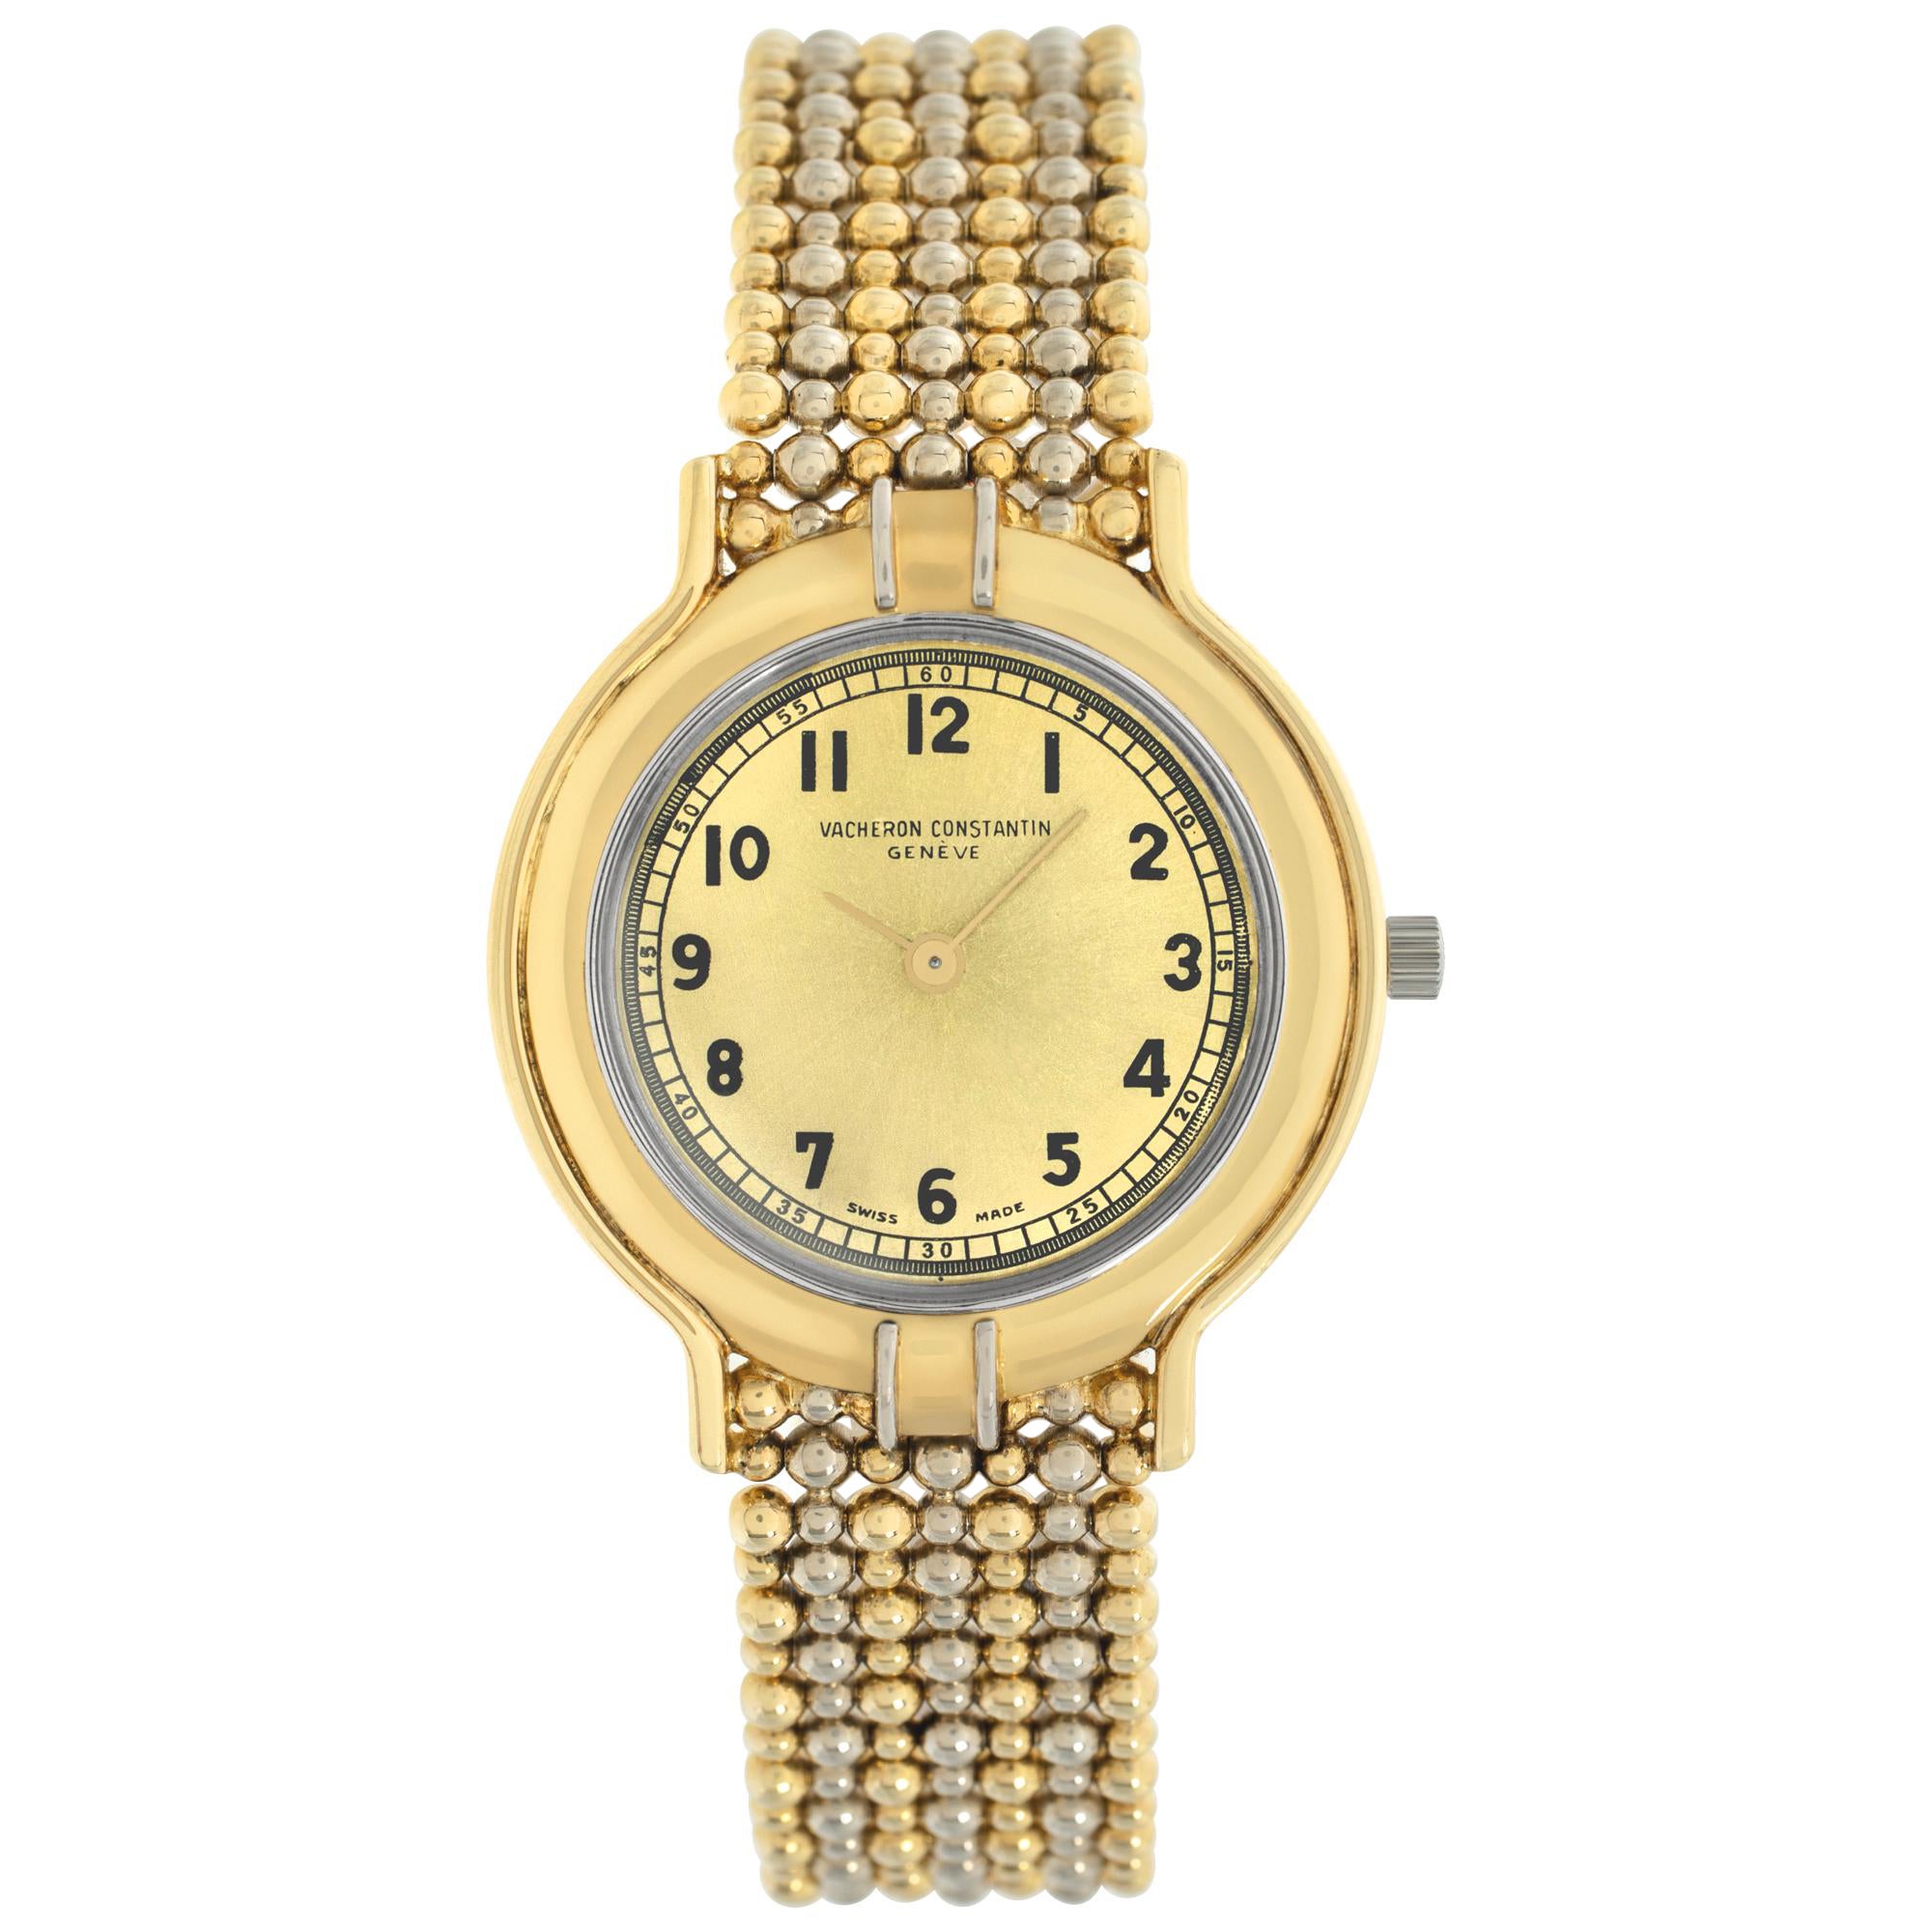 Vacheron Constantin Geneve 18k white & yellow gold Manual Wristwatch Circa 1965 For Sale